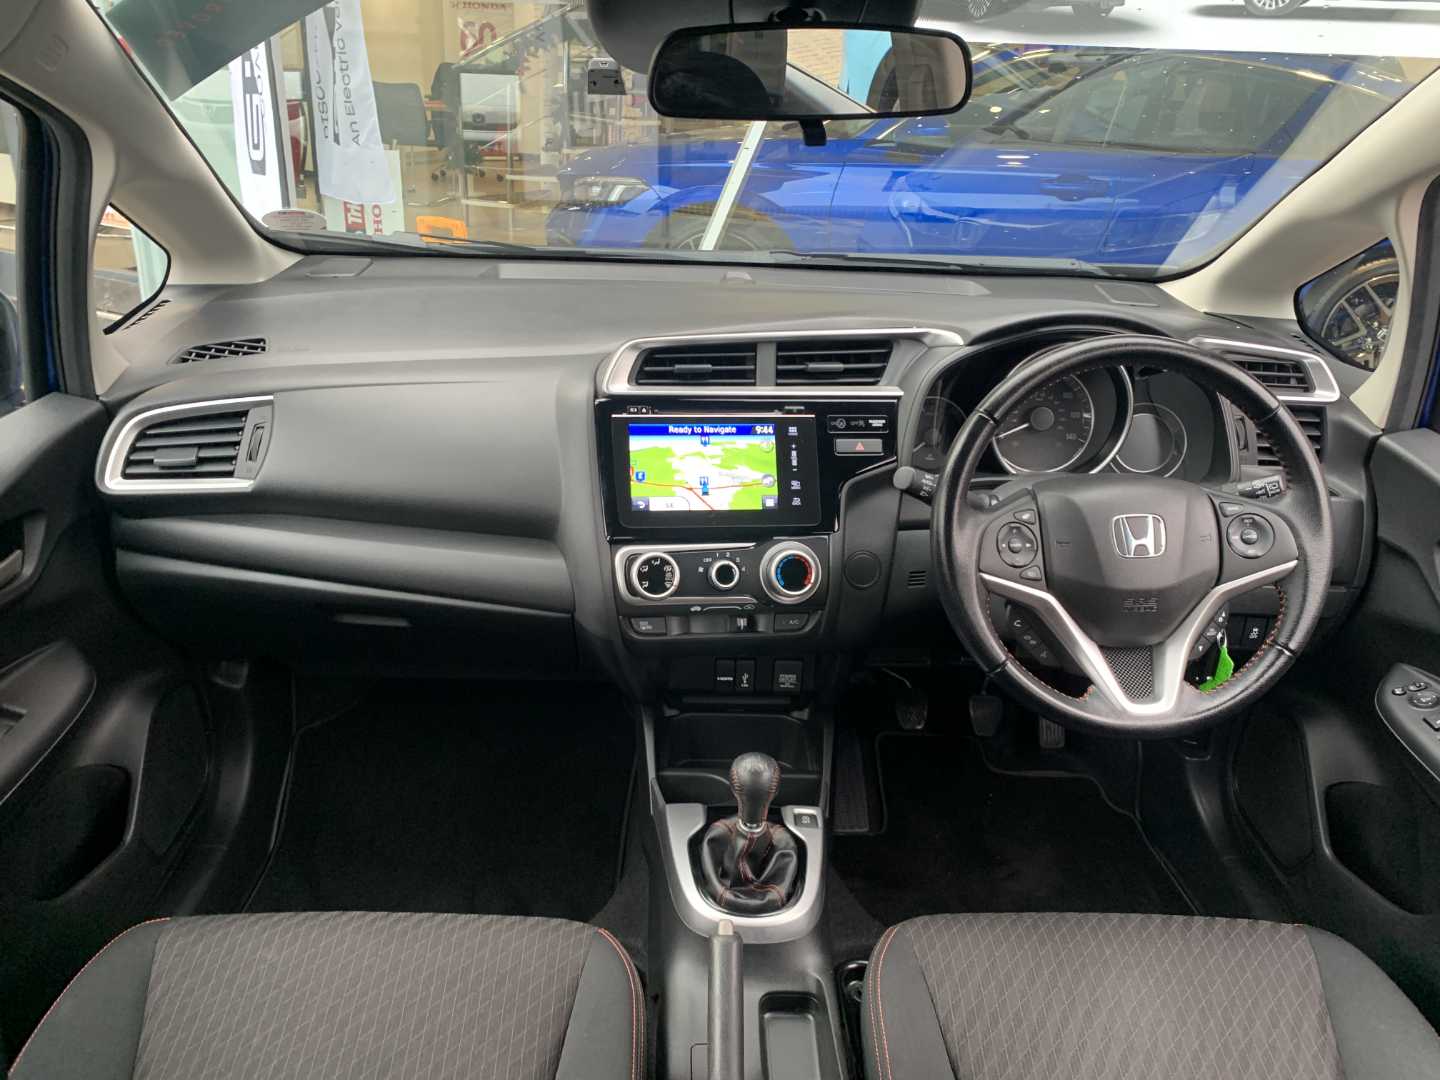 Honda JAZZ 1.5 i-VTEC Sport Navi 5dr - Image 4